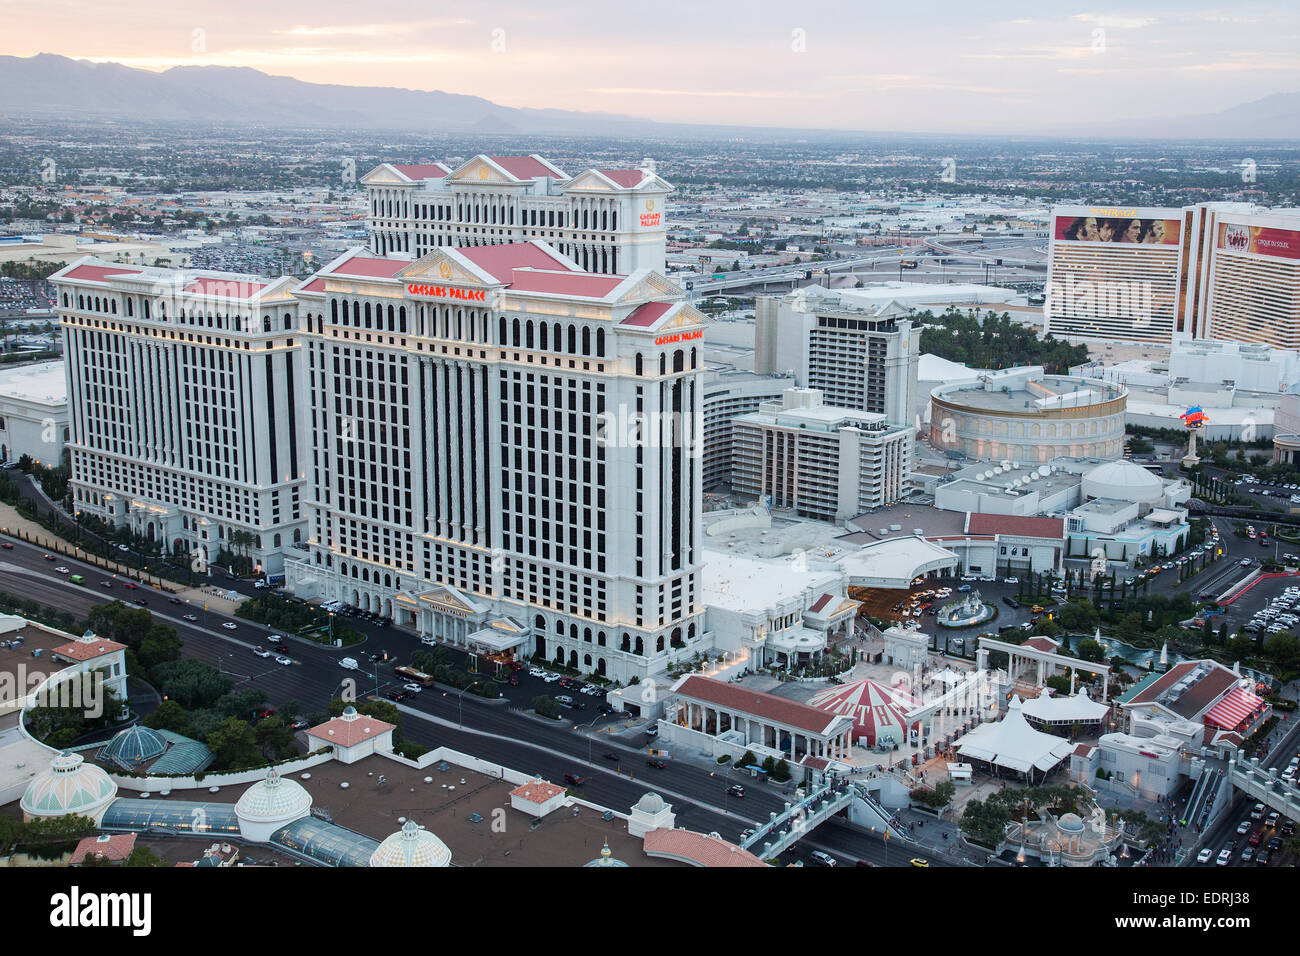 Caesars Palace Hotel and Casino on the Las Vegas Strip in Paradise, Nevada. Stock Photo